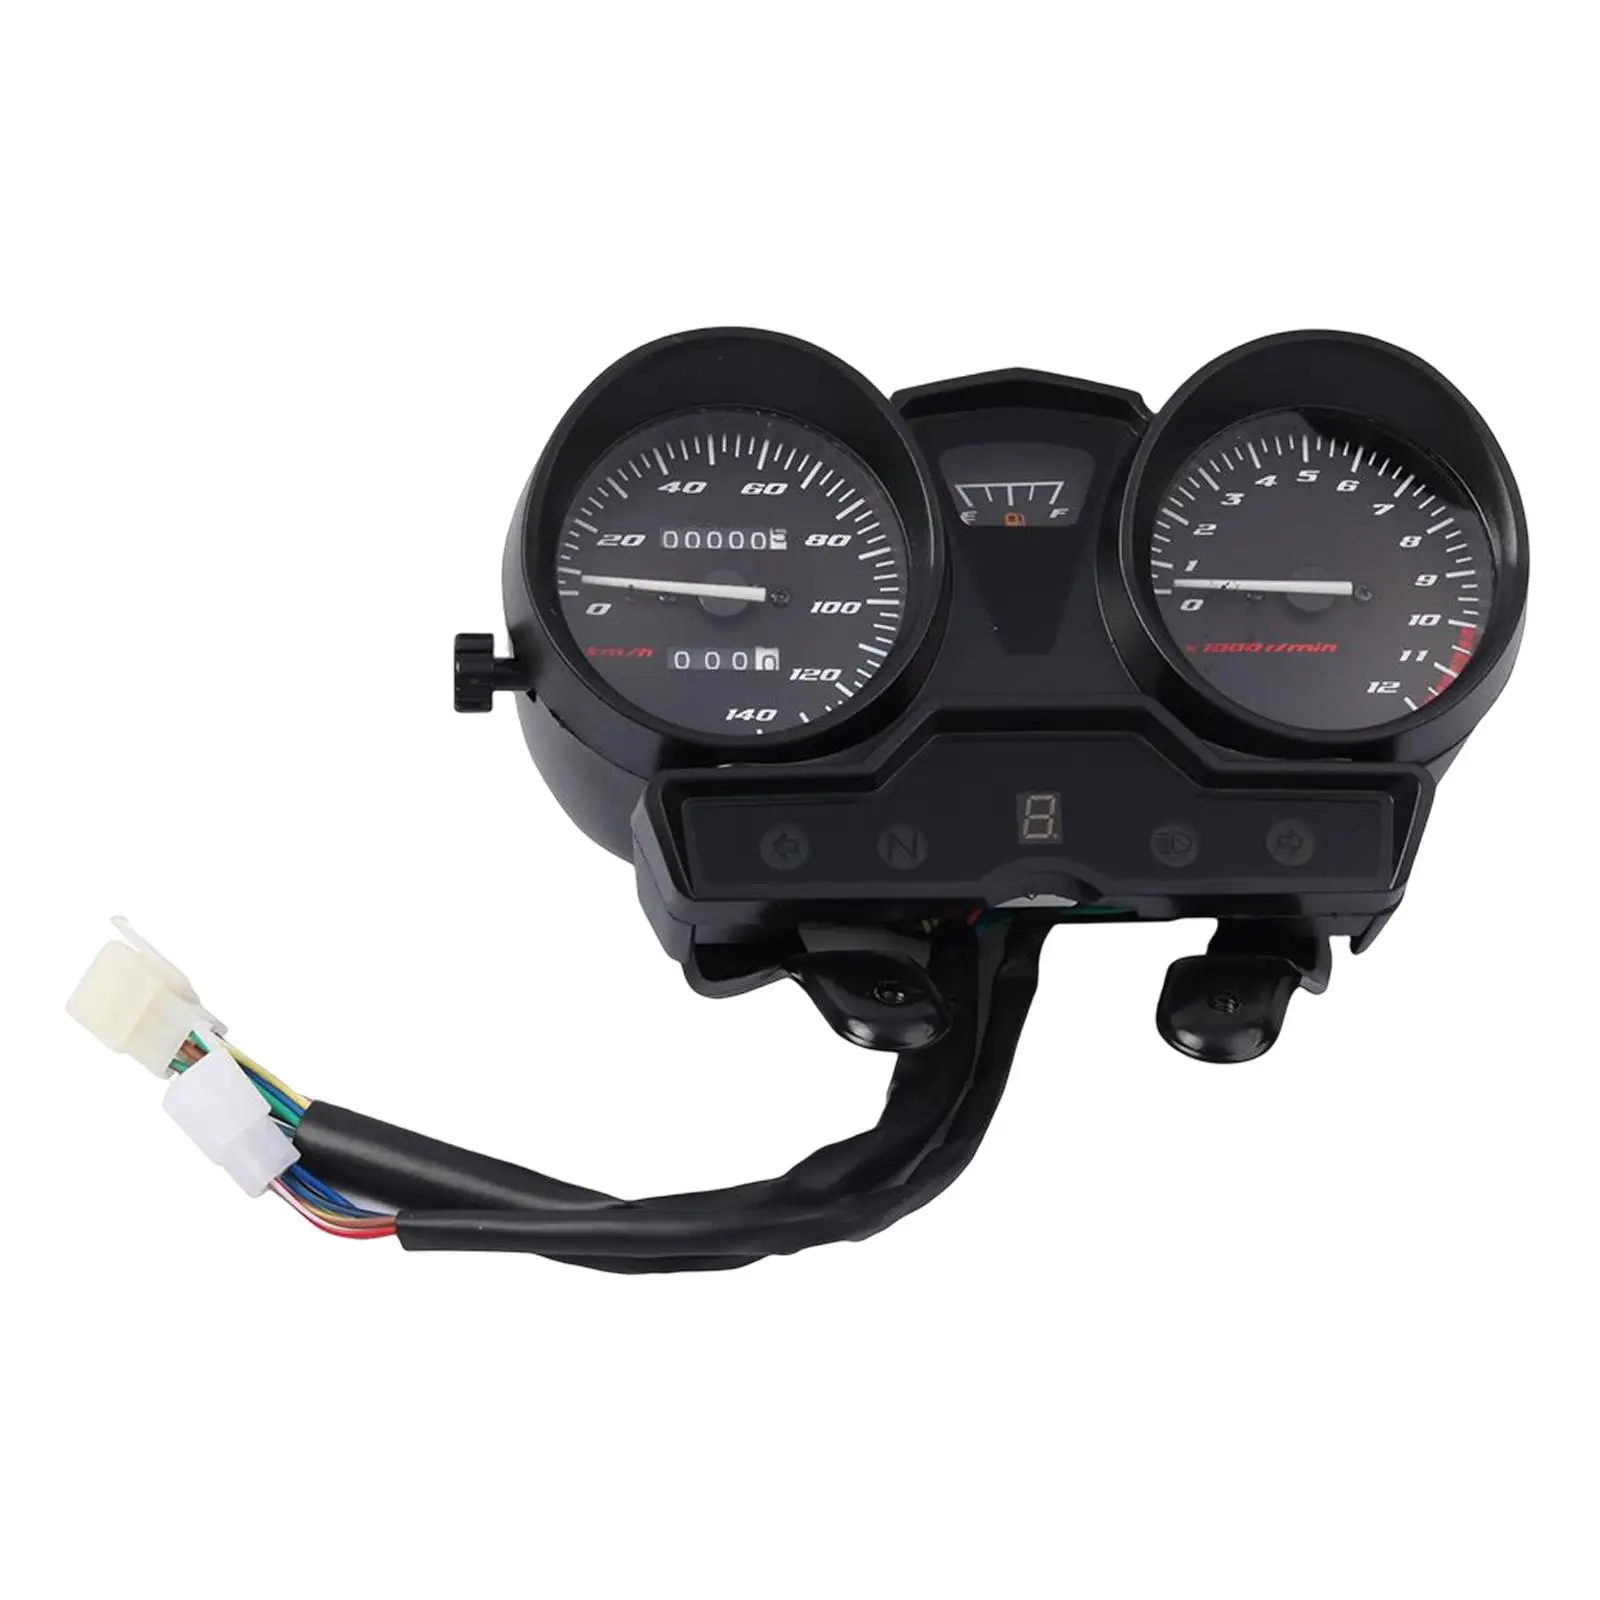 Digital Dashboard Speedometer Guage Motorcycle RPM Meter with Gear Display